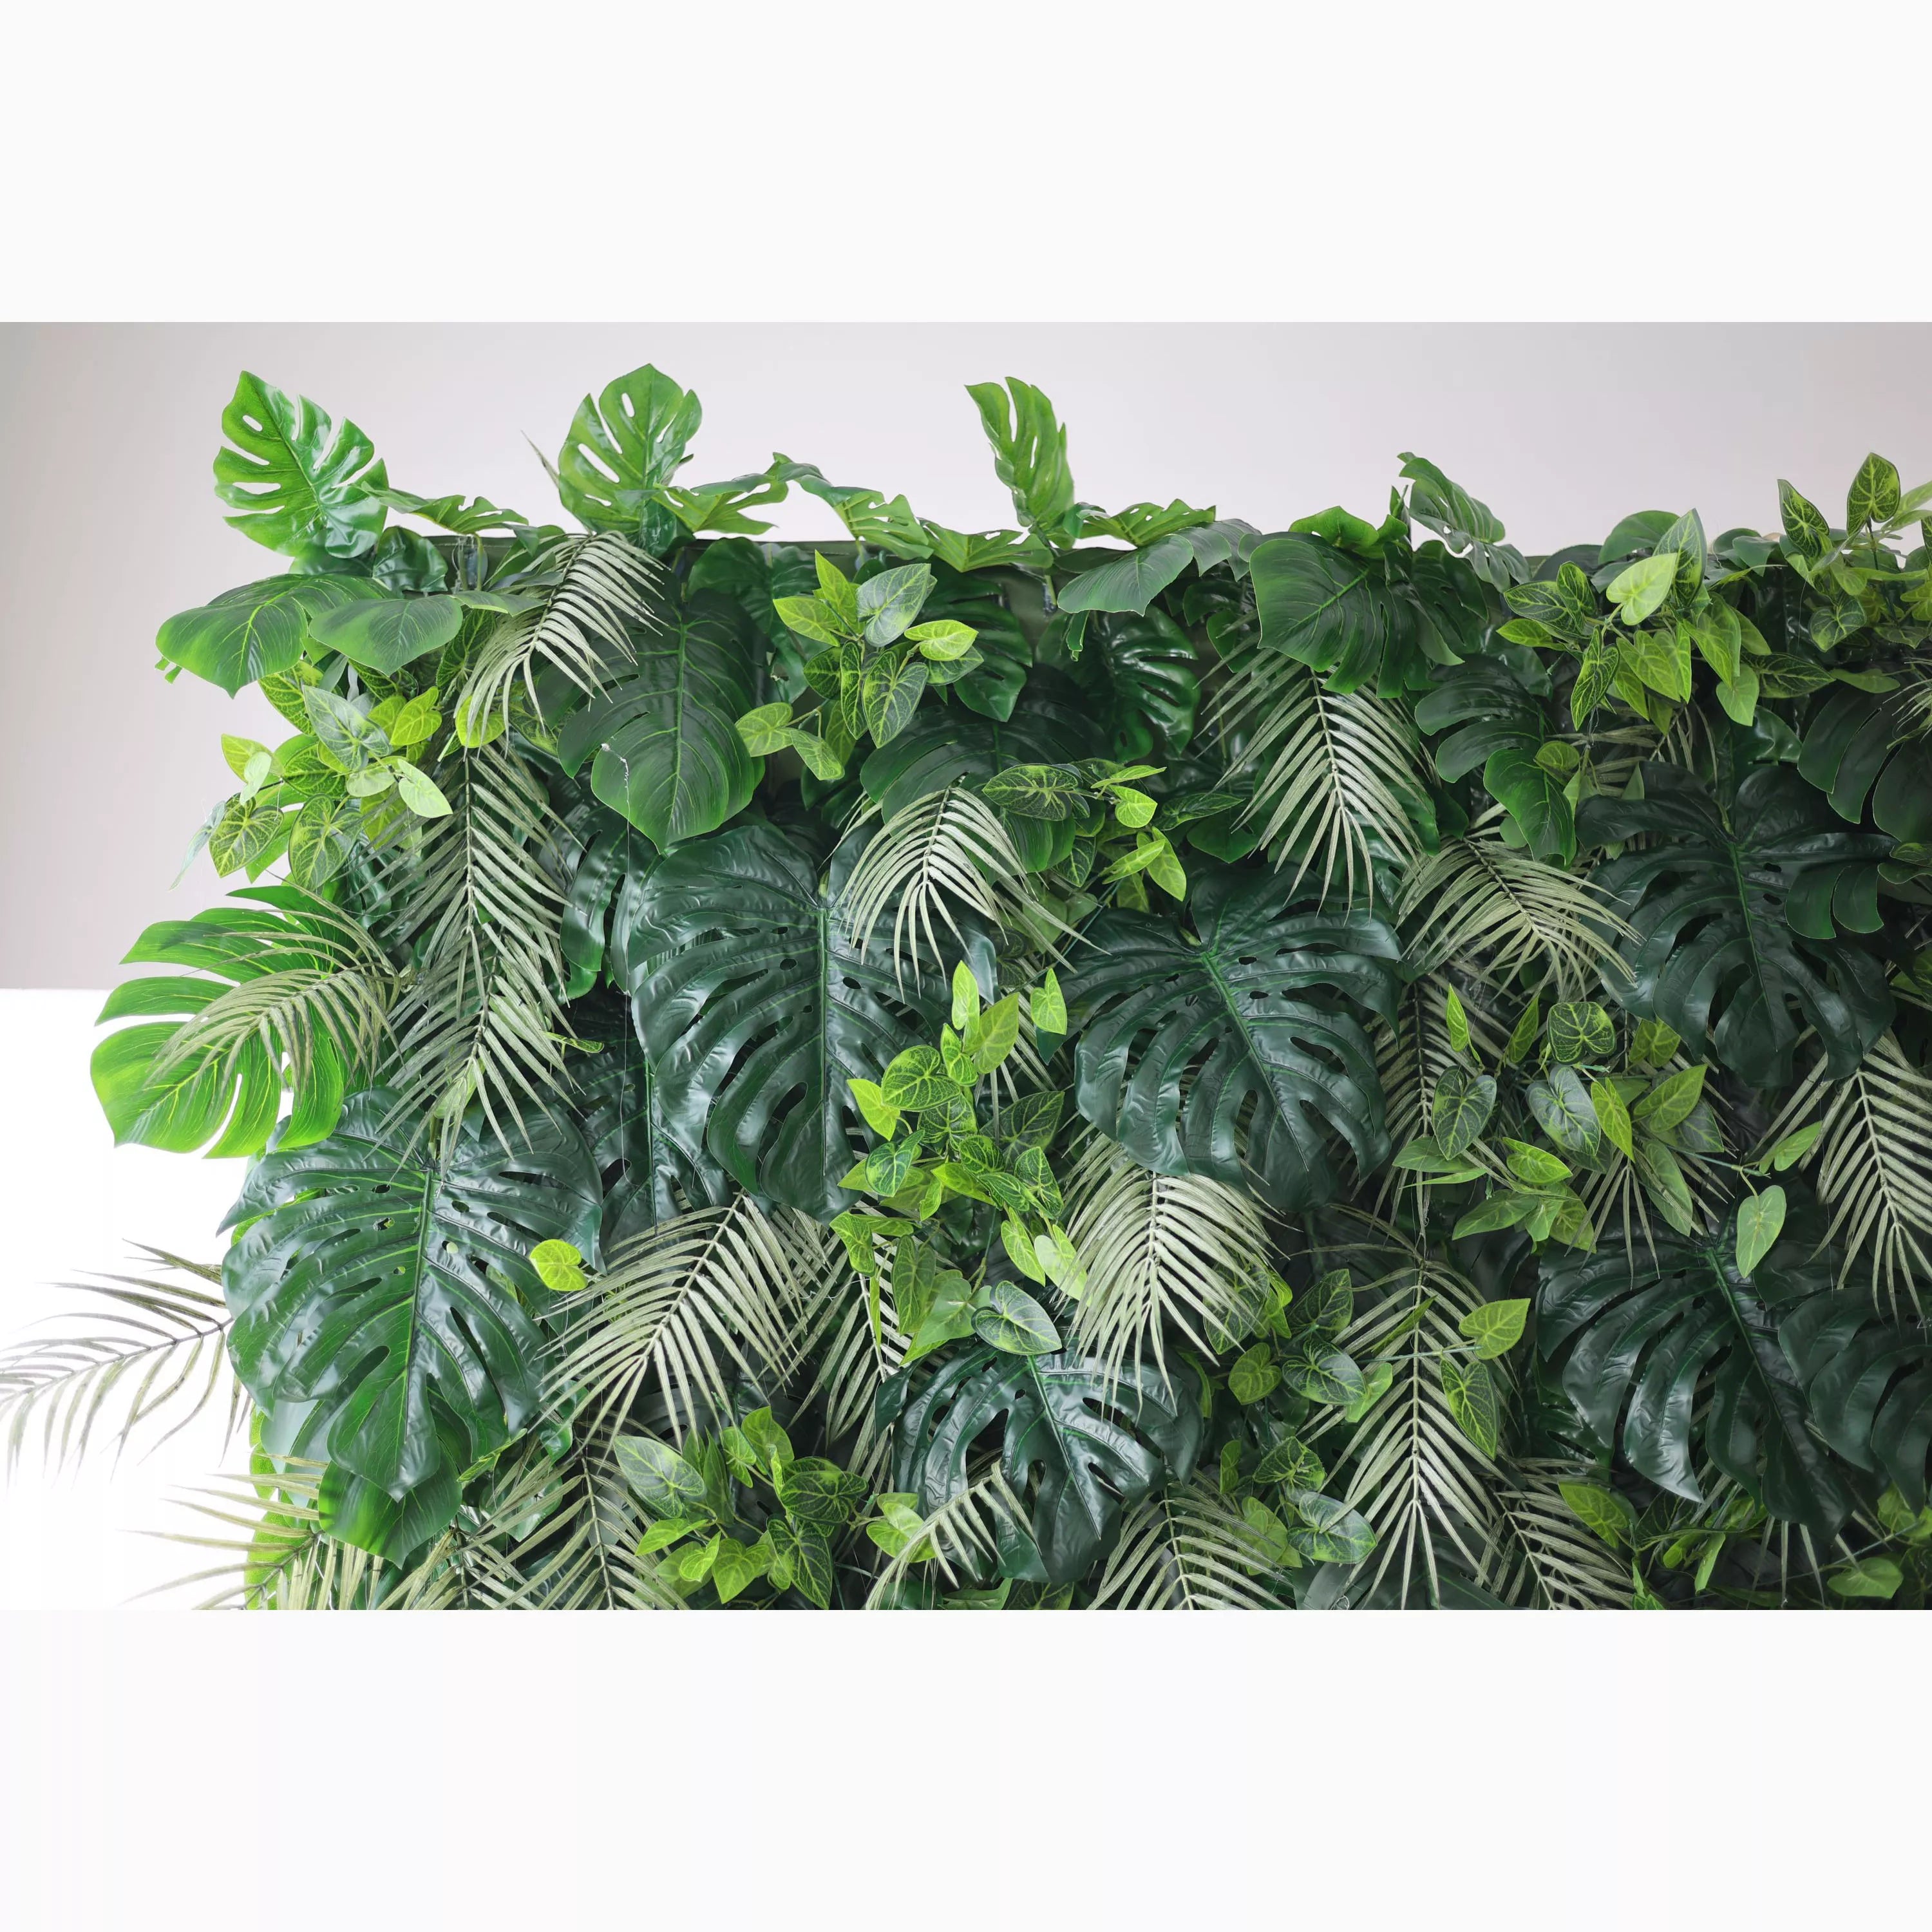 Valar Flowers présente : Tropical Eden – Un mur vert en tissu artificiel exquis-VF-213 